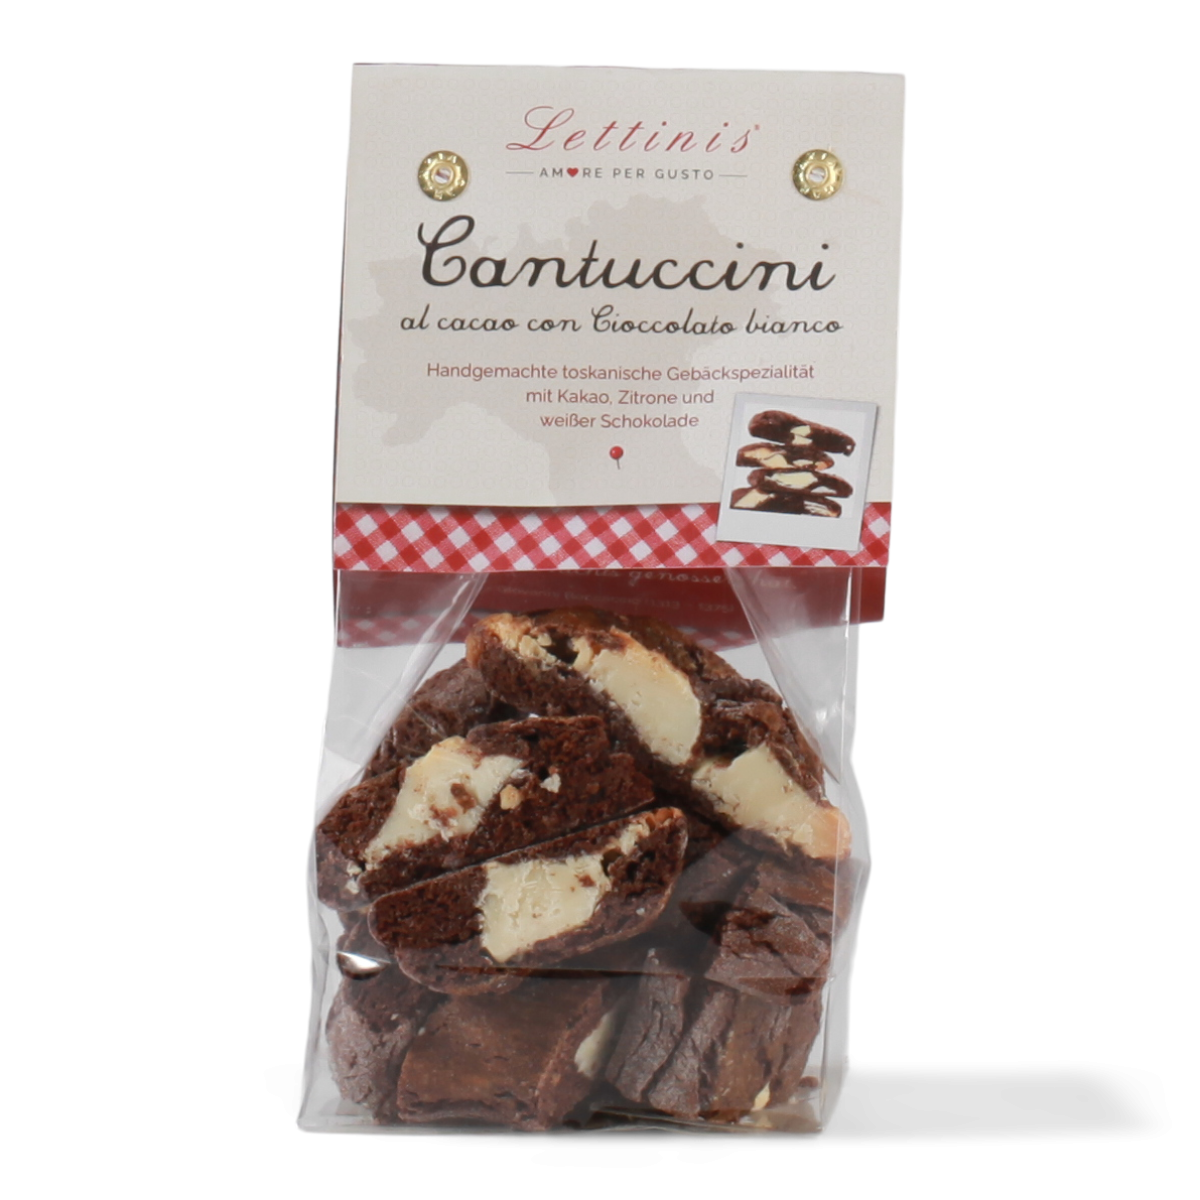 Lettinis Cantuccini mit weißer Schokolade - con Cioccolato Bianco ⋆ ...